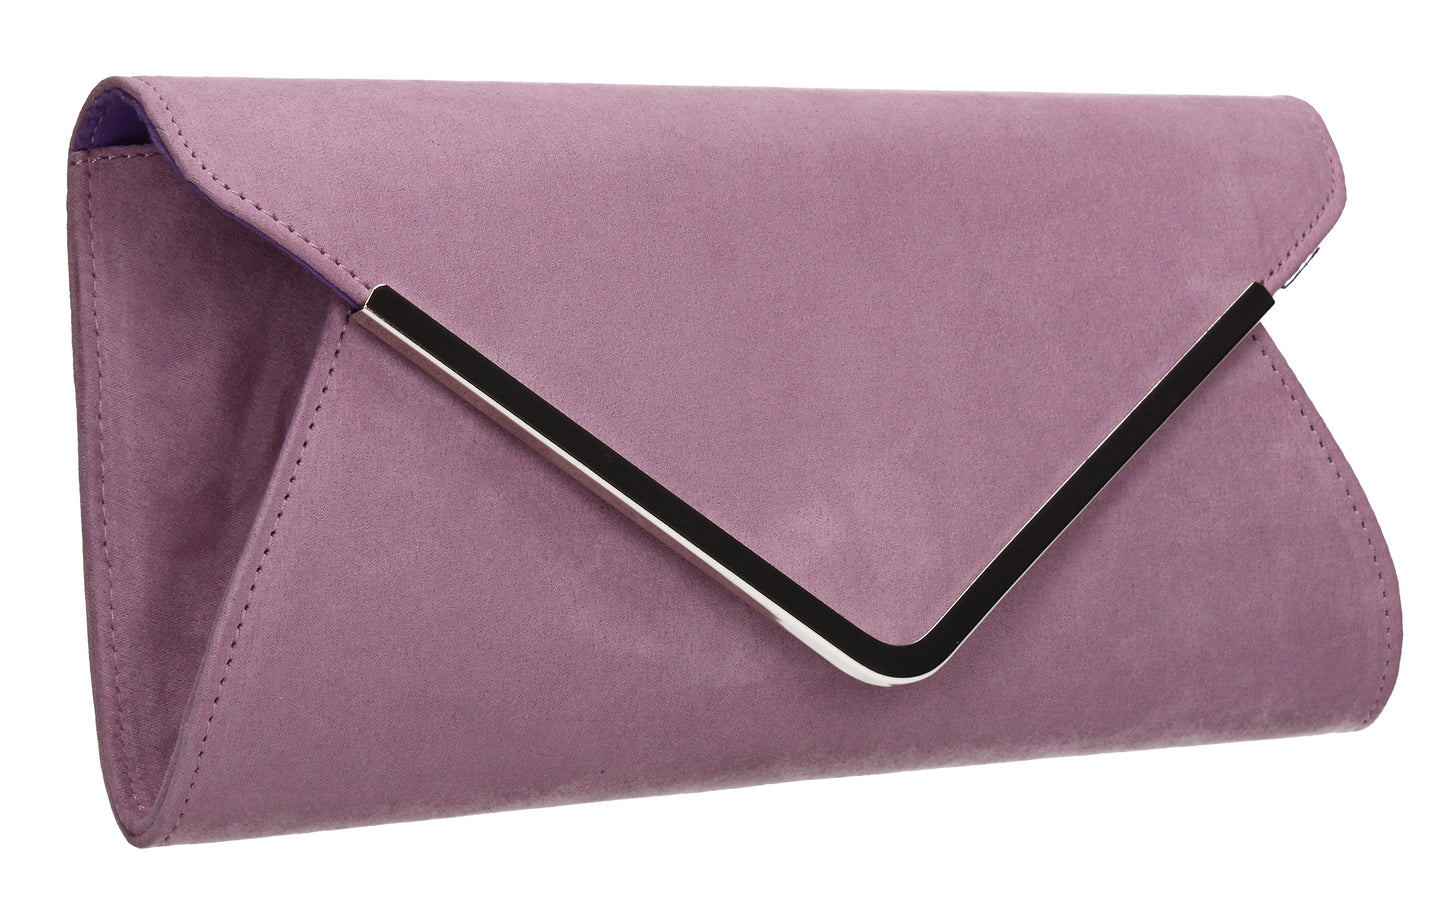 SWANKYSWANS Karlie Suede Clutch Bag Lilac Cute Cheap Clutch Bag For Weddings School and Work